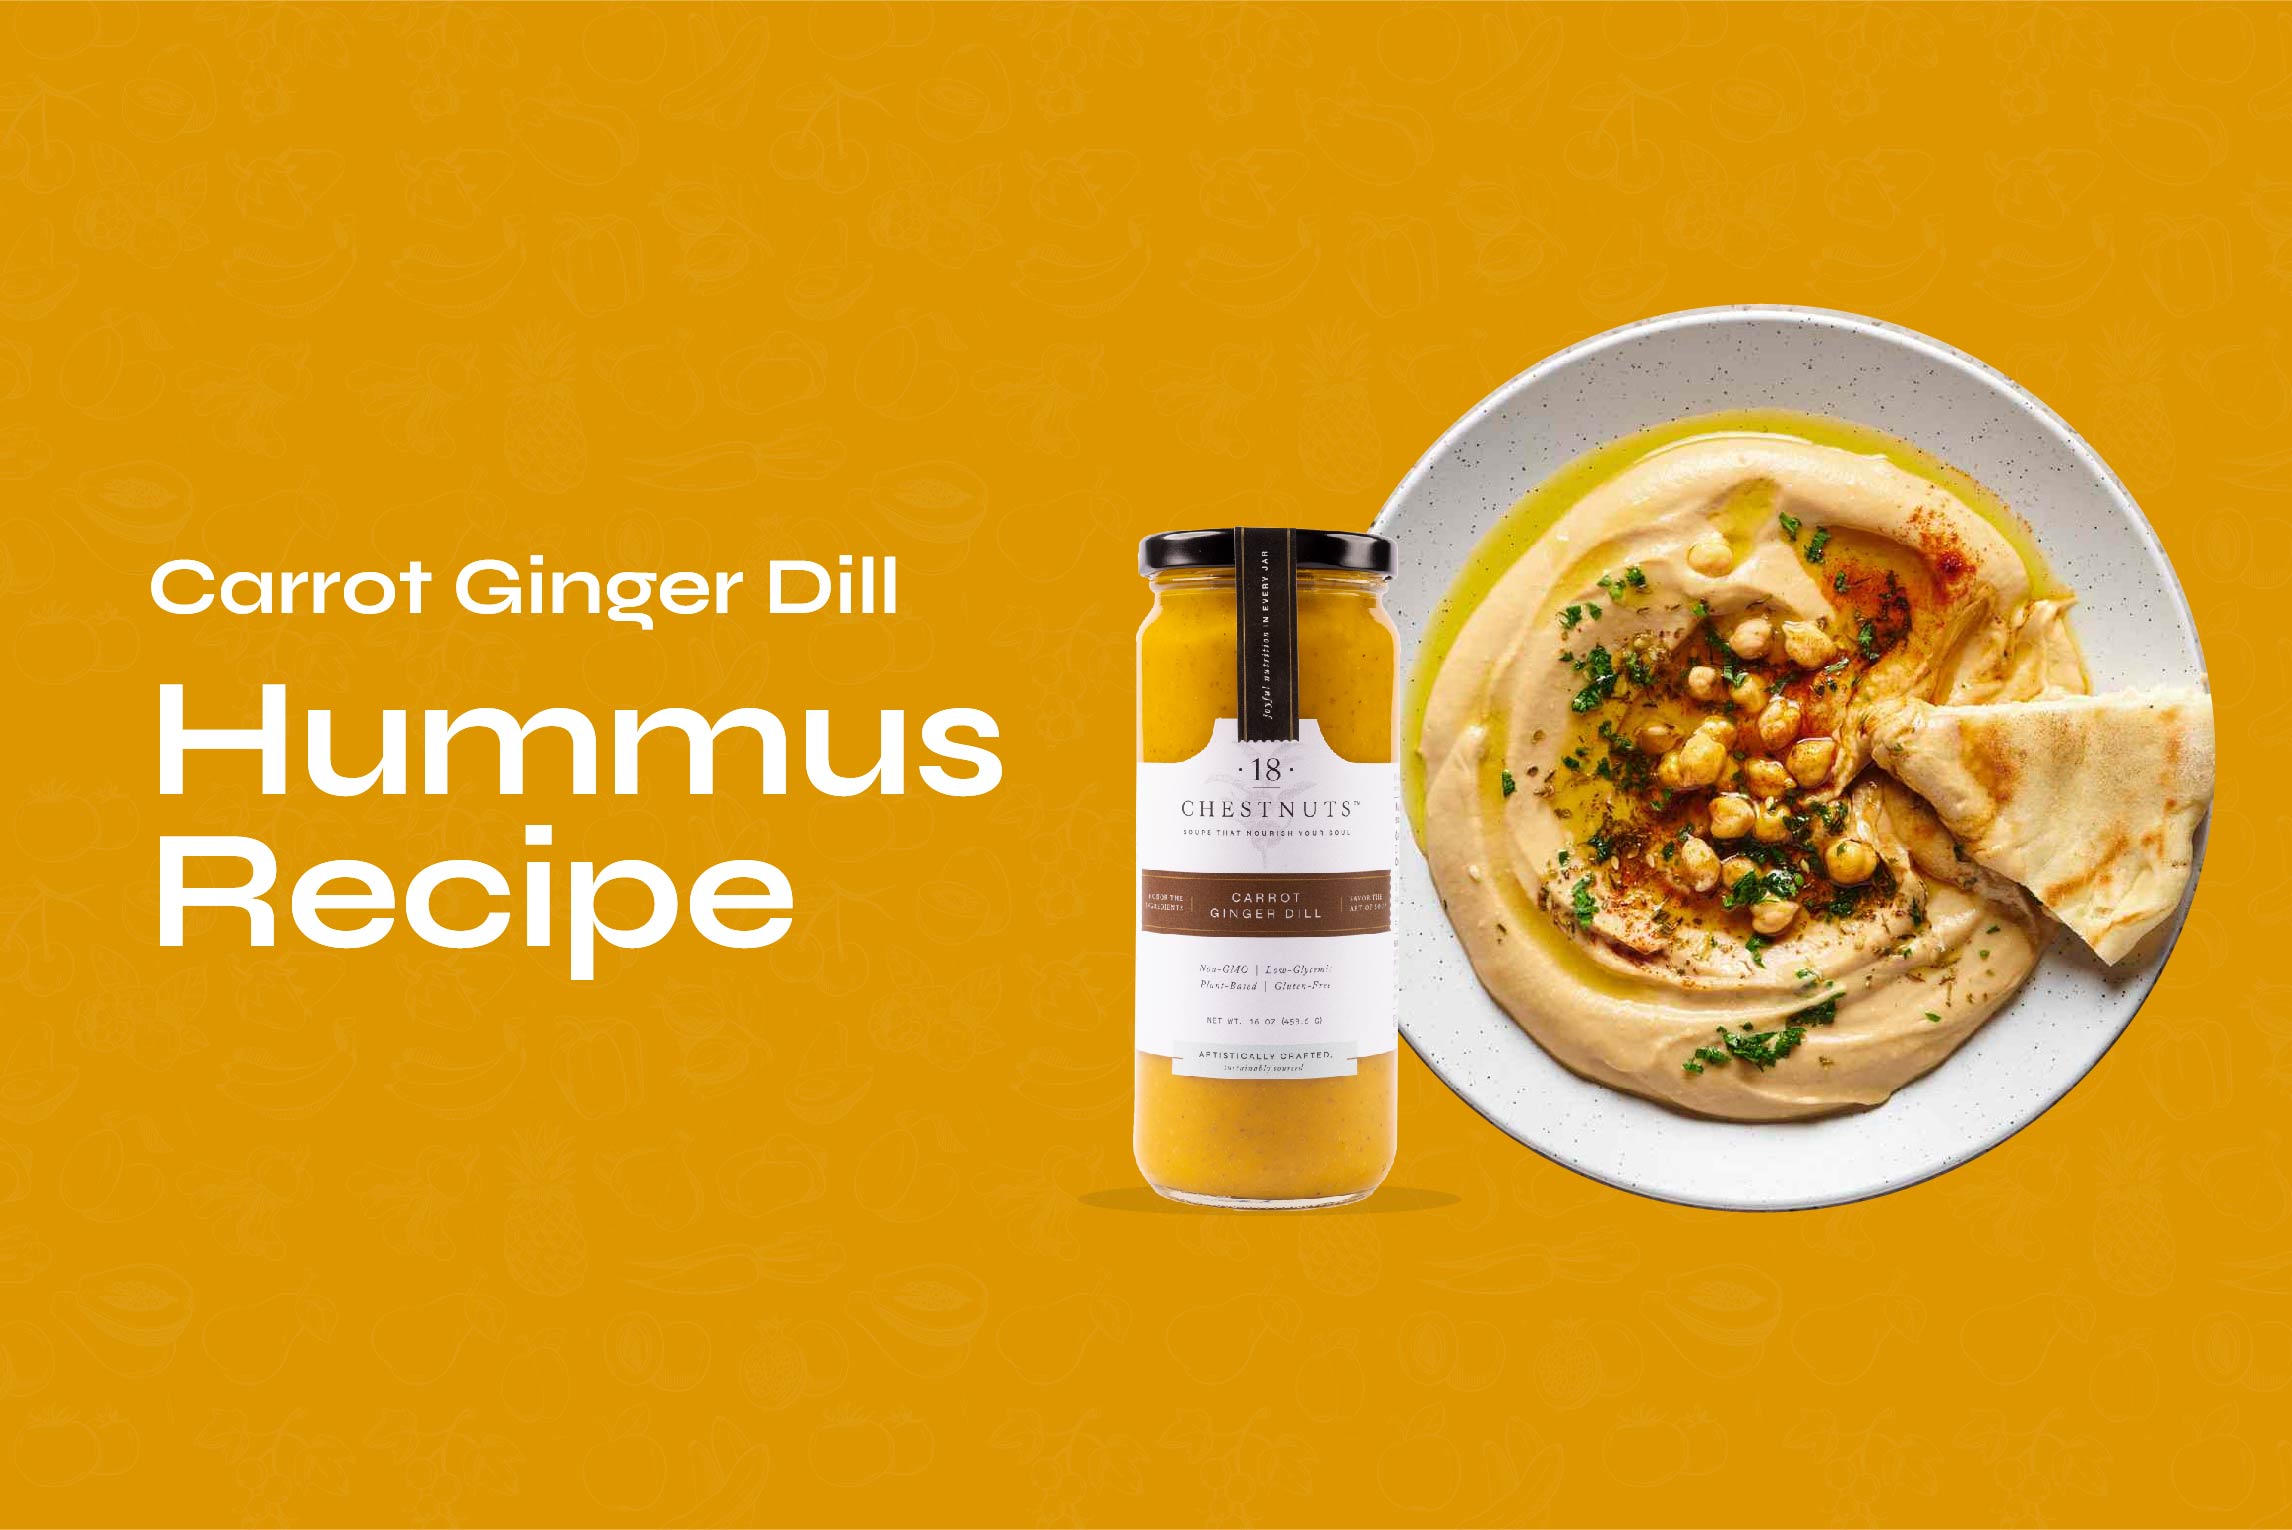 Carrot Ginger Dill Hummus Recipe